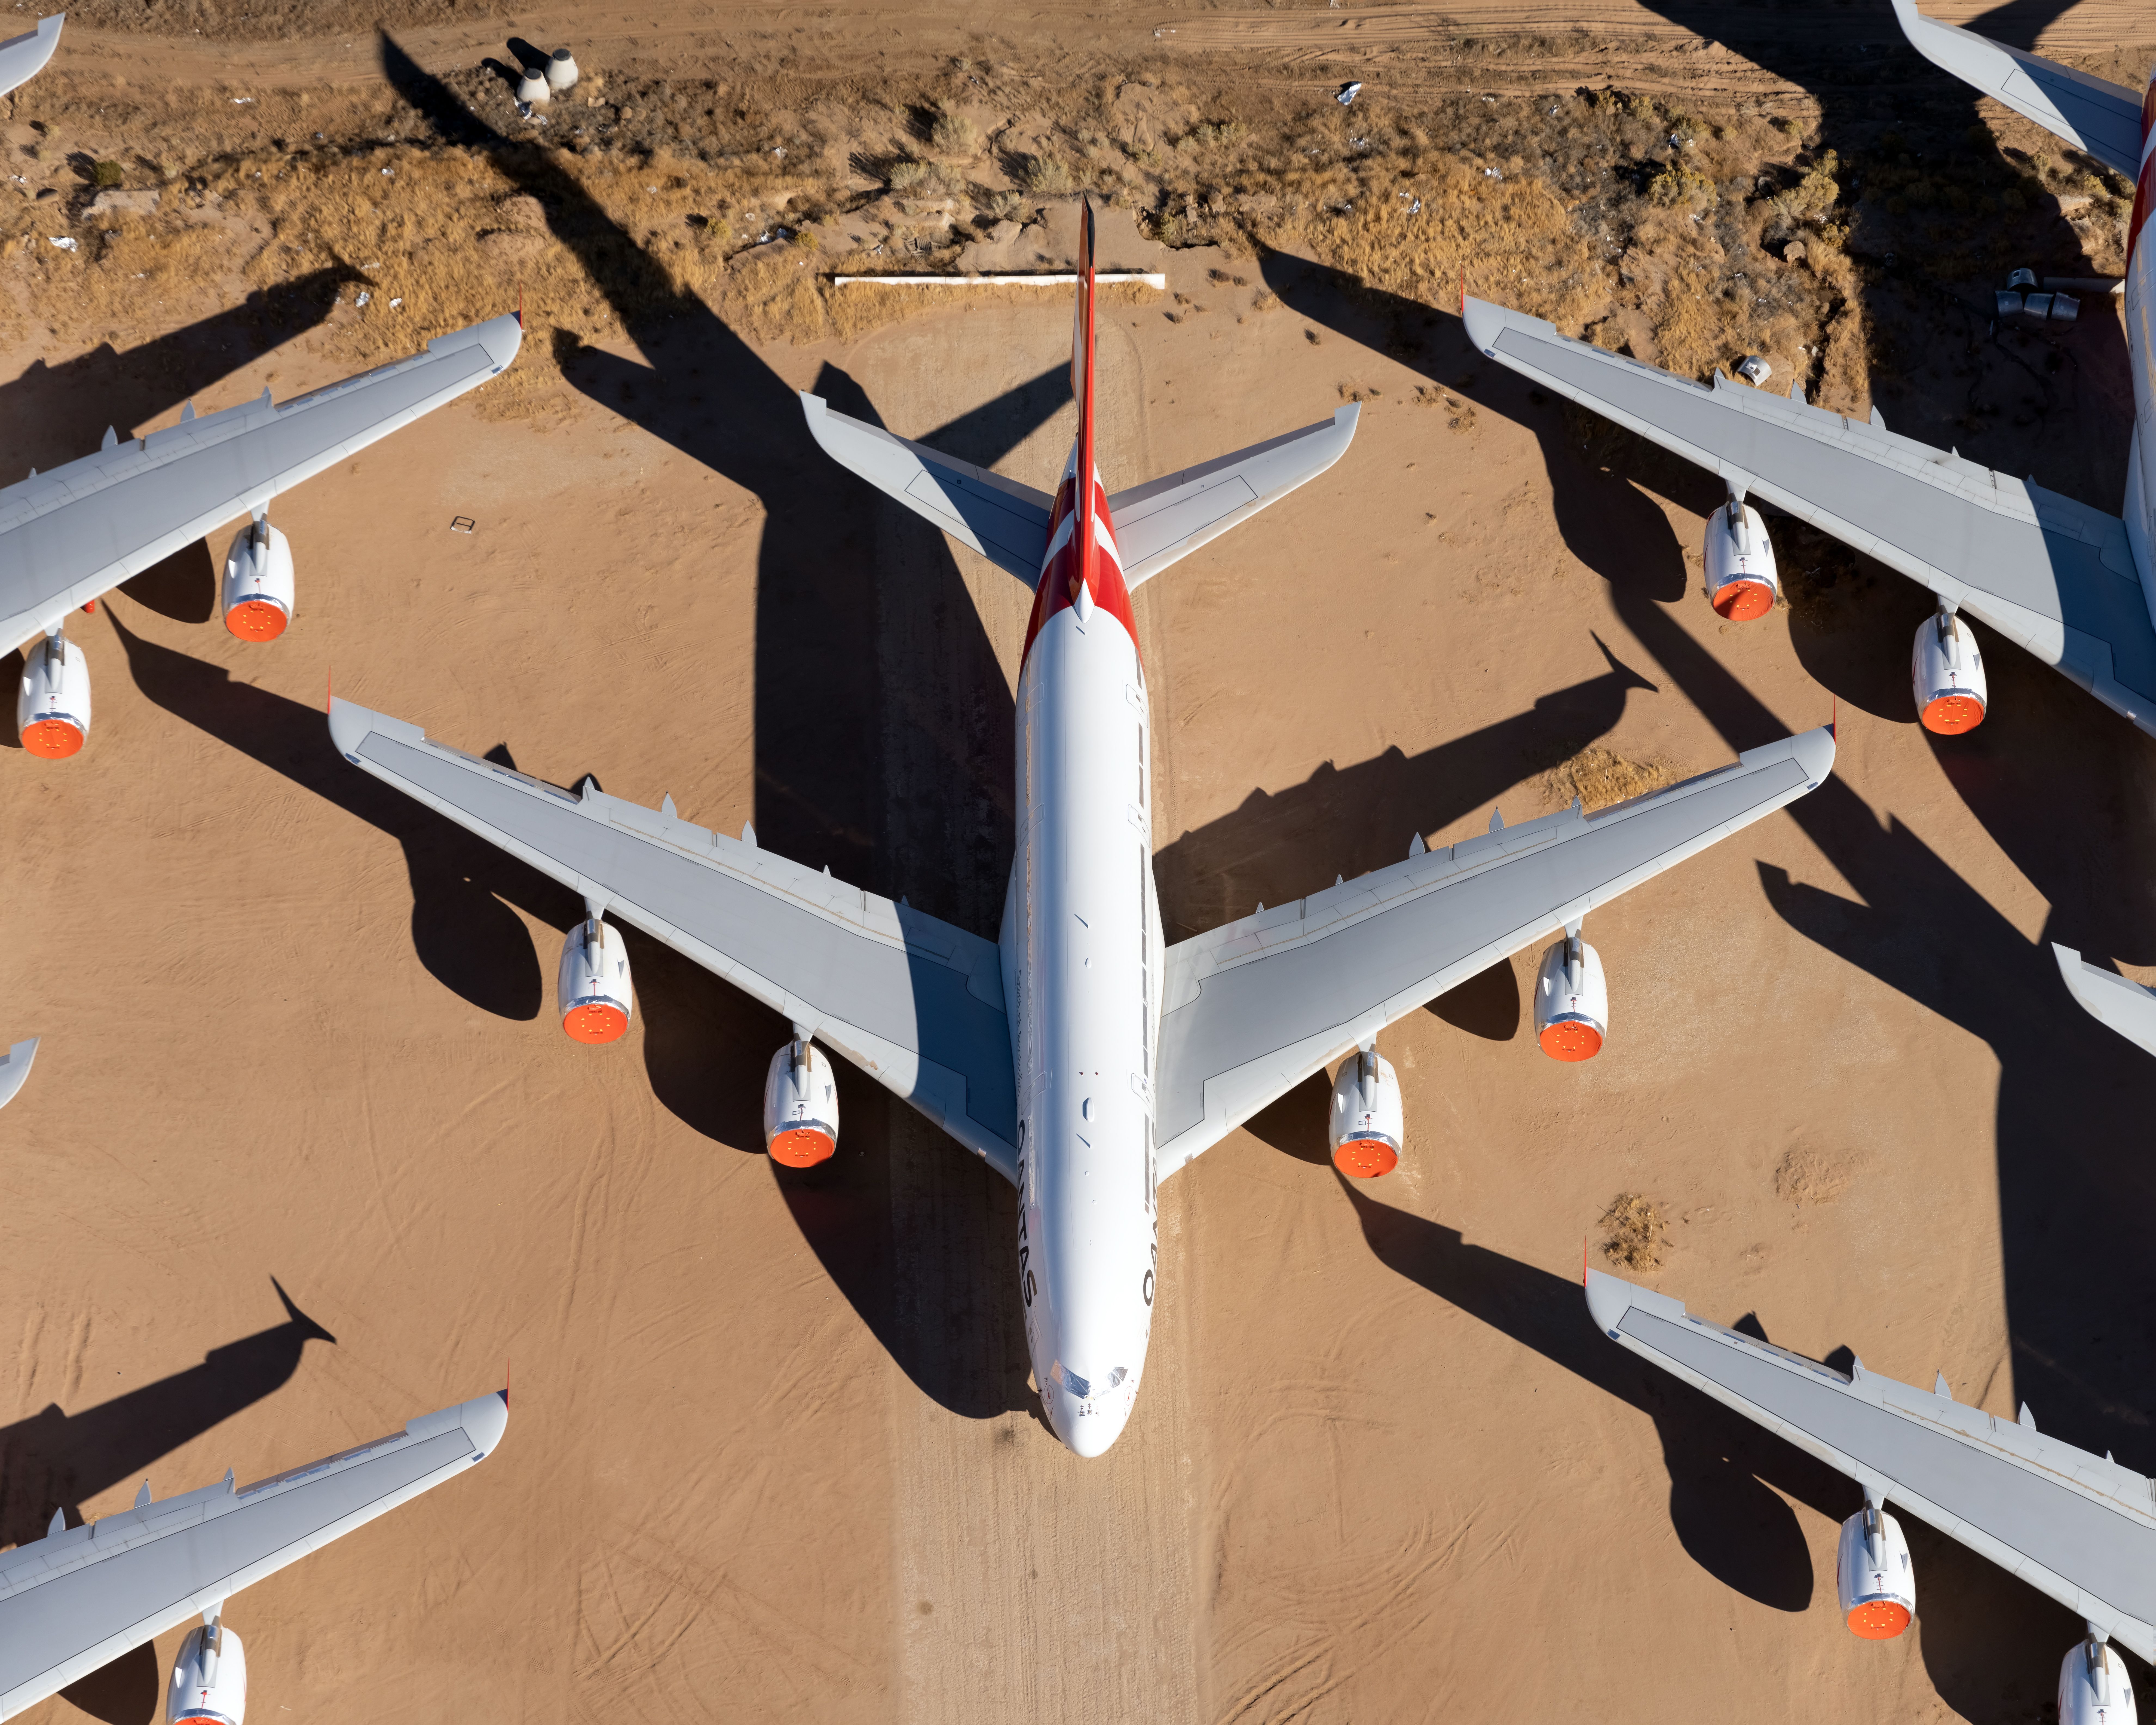 A Qantas Airbus A380-841 stored in a desert area.